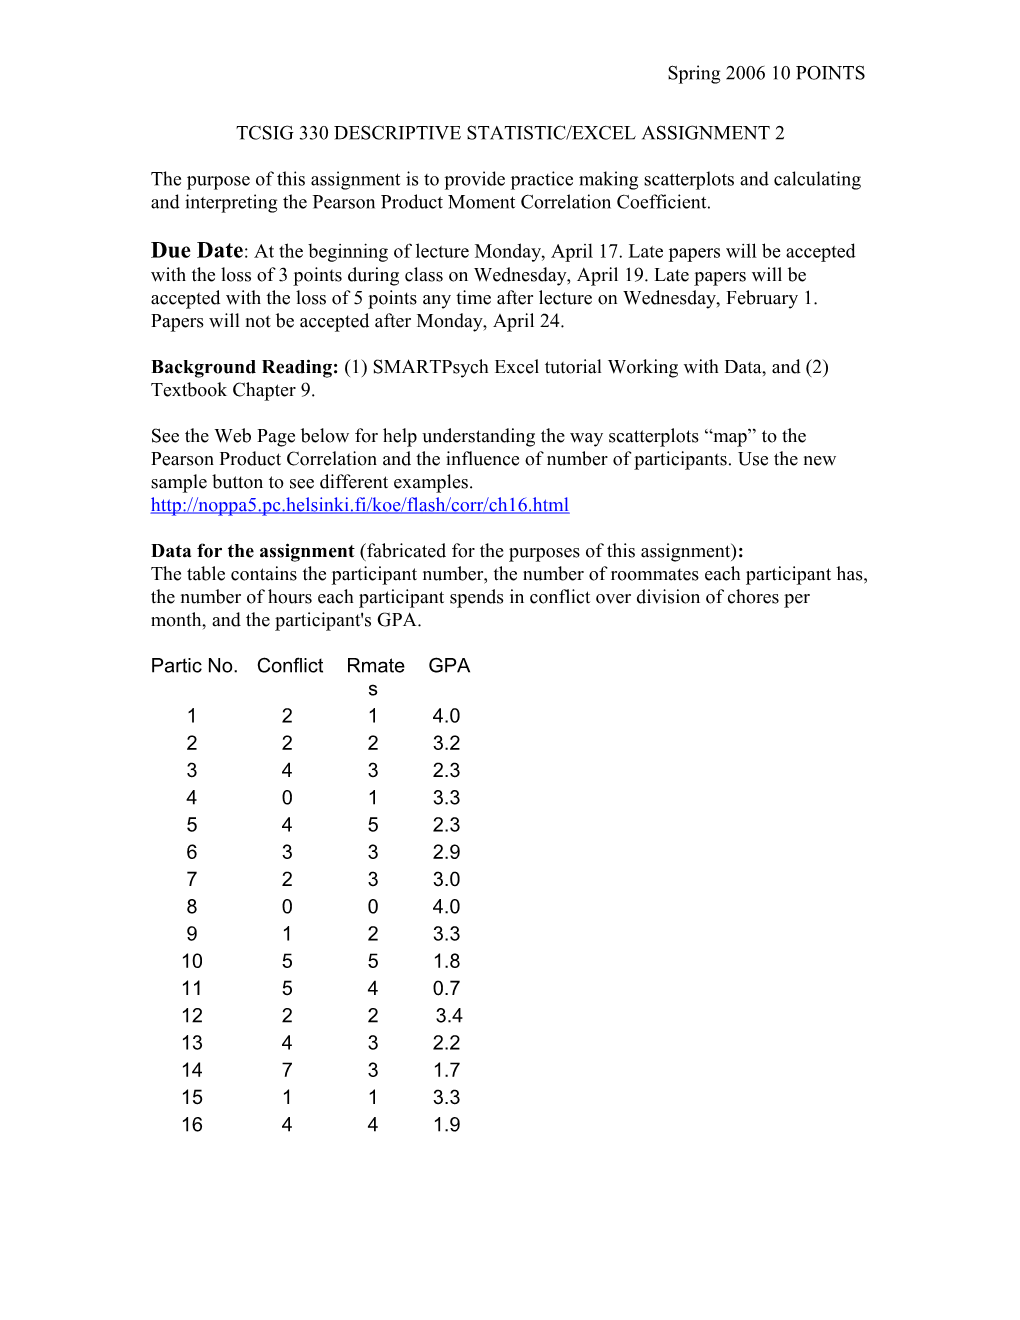 Psychology 209 Descriptive Statistic/Excel Assignment 2